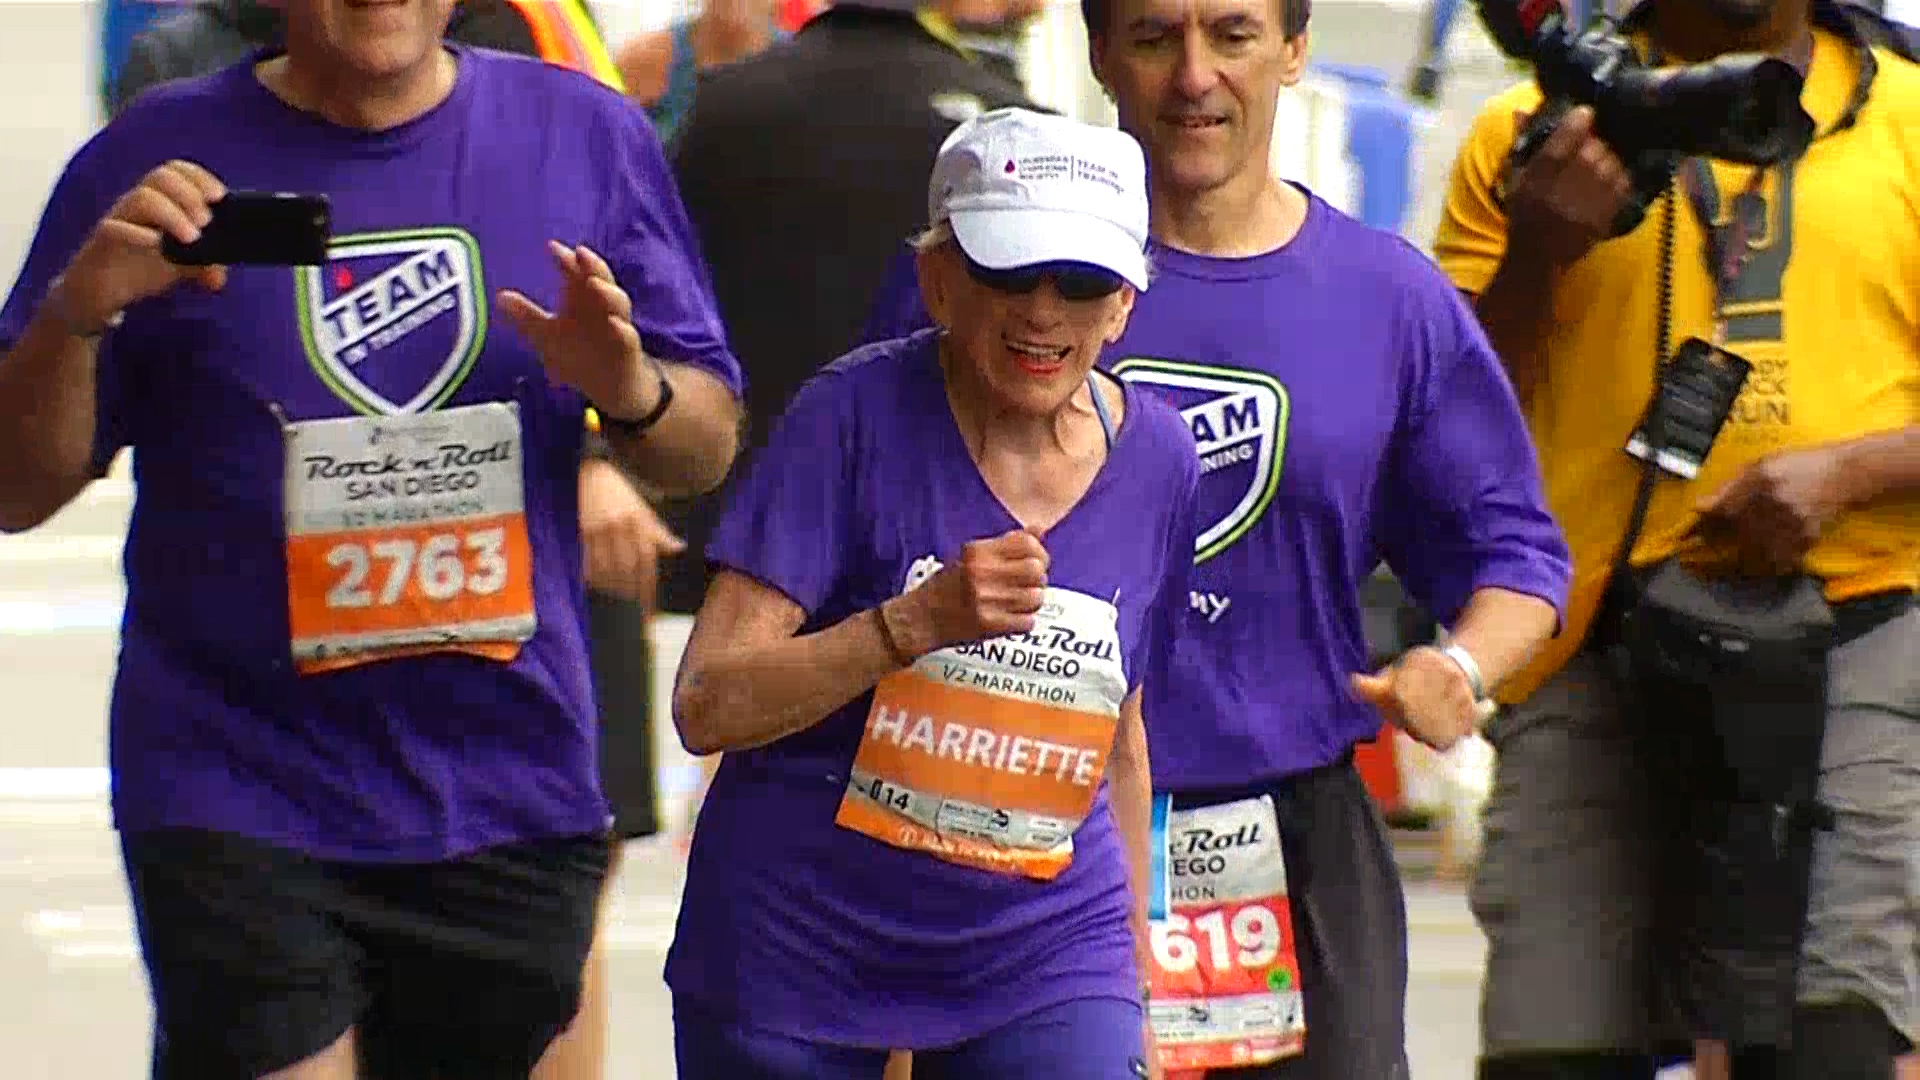 80-Year-Old Woman Sets A Half Marathon Record - Women's Running